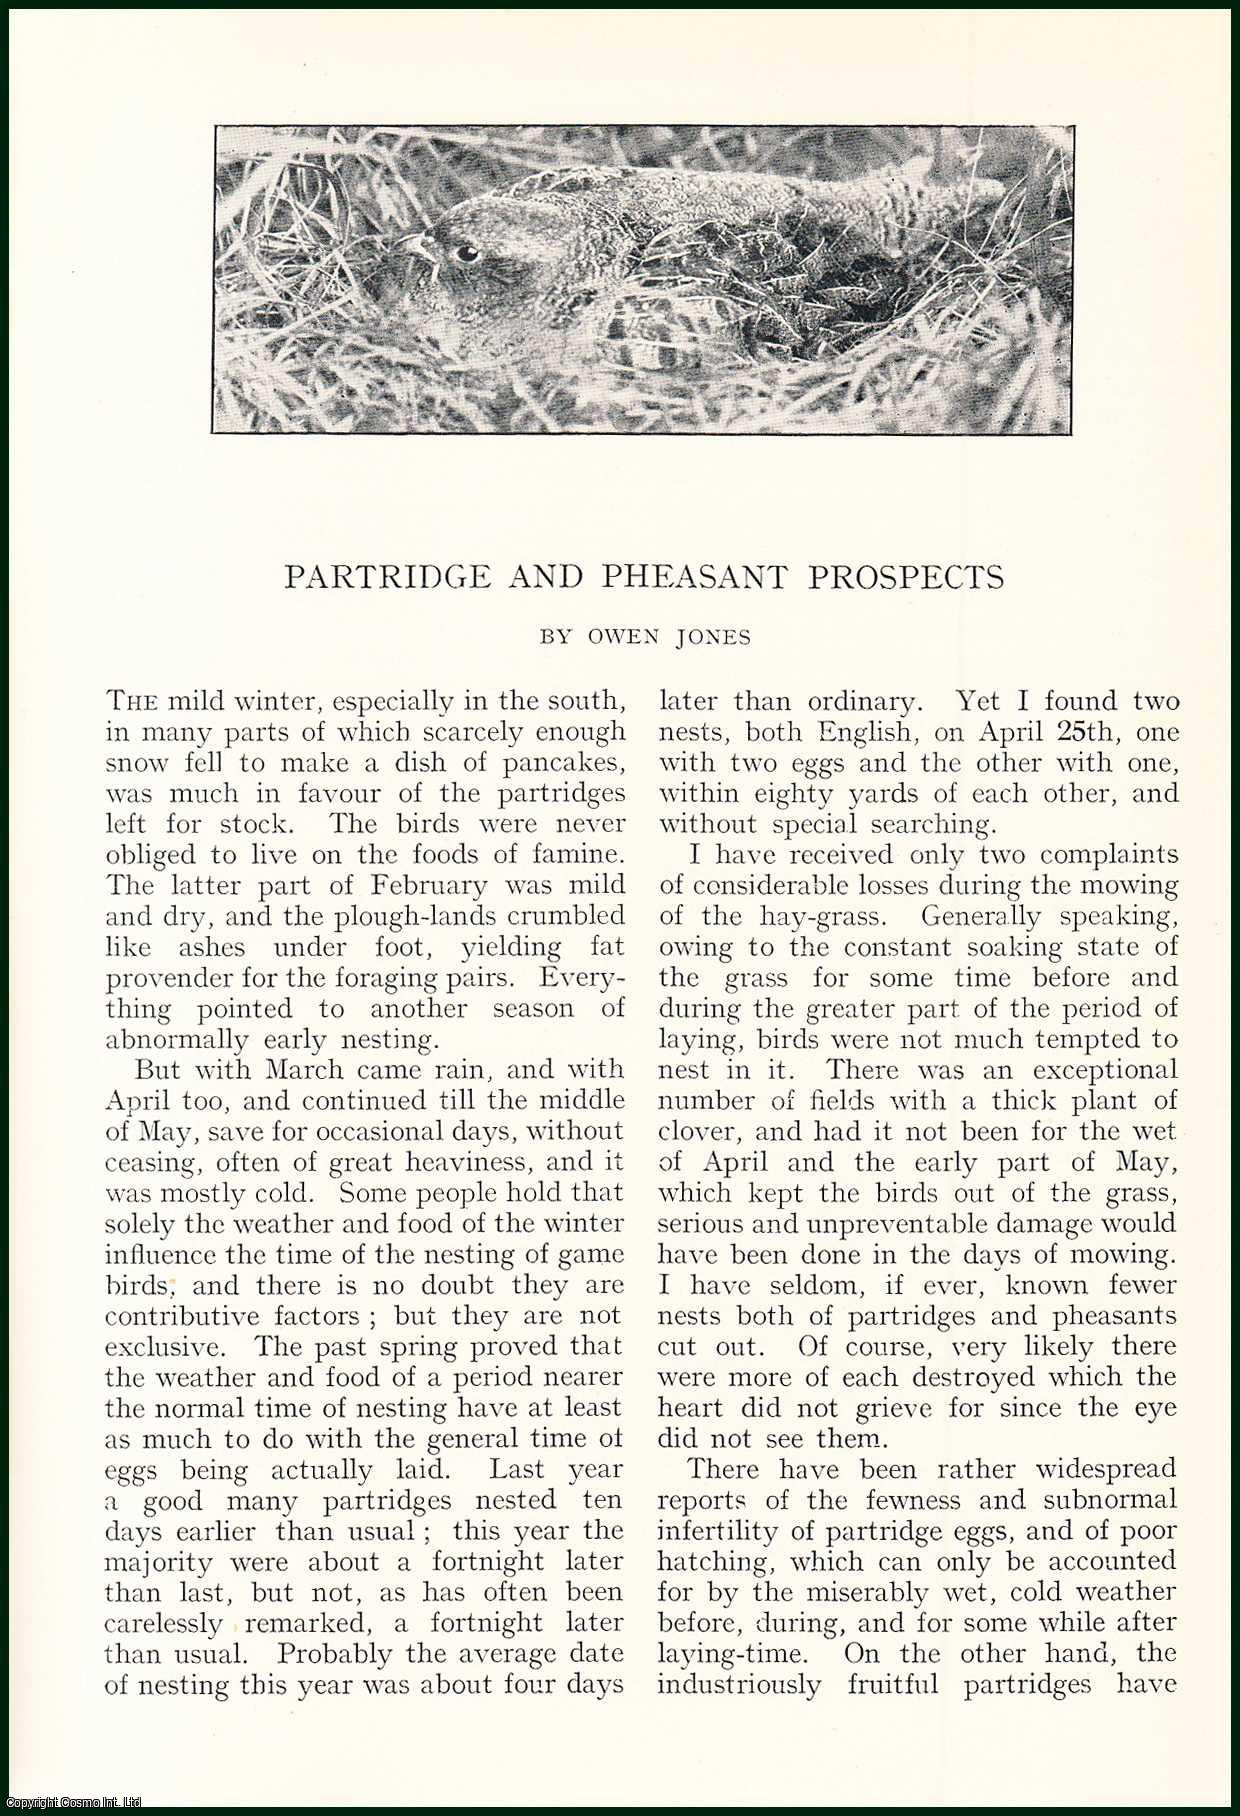 Owen Jones - Partridge & Pheasant Prospects. An uncommon original article from the Badminton Magazine, 1913.